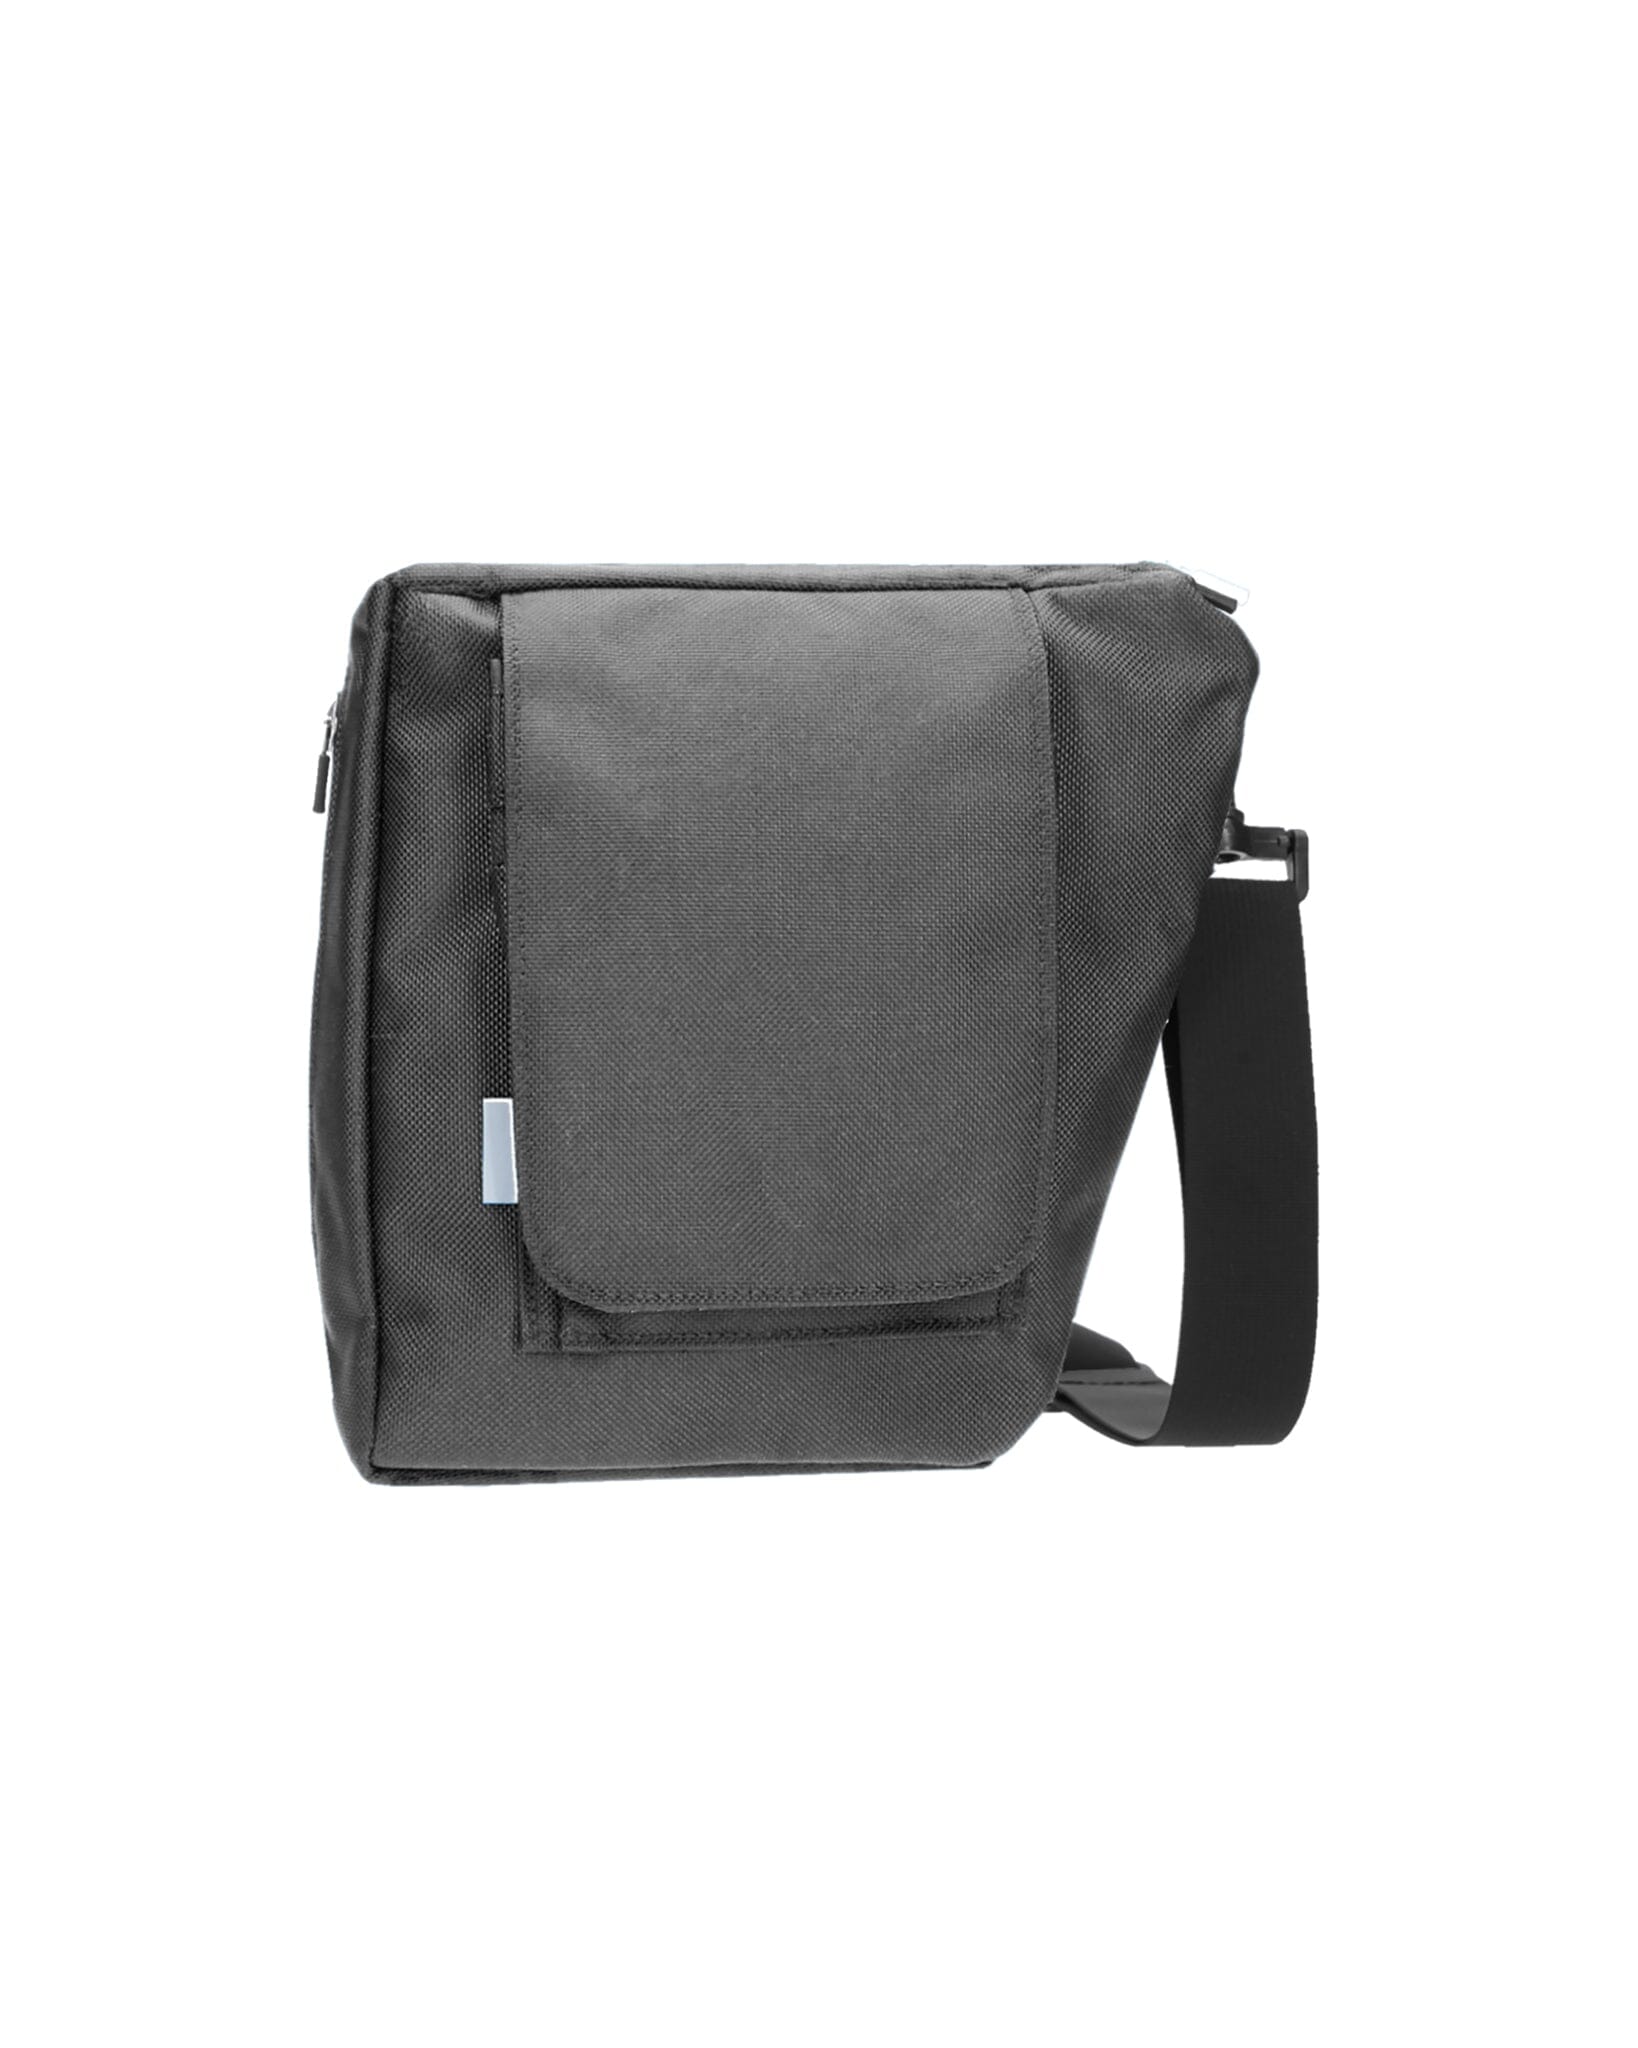 Small Carry - Grey Matter Bag bolstr Grey Lefty 